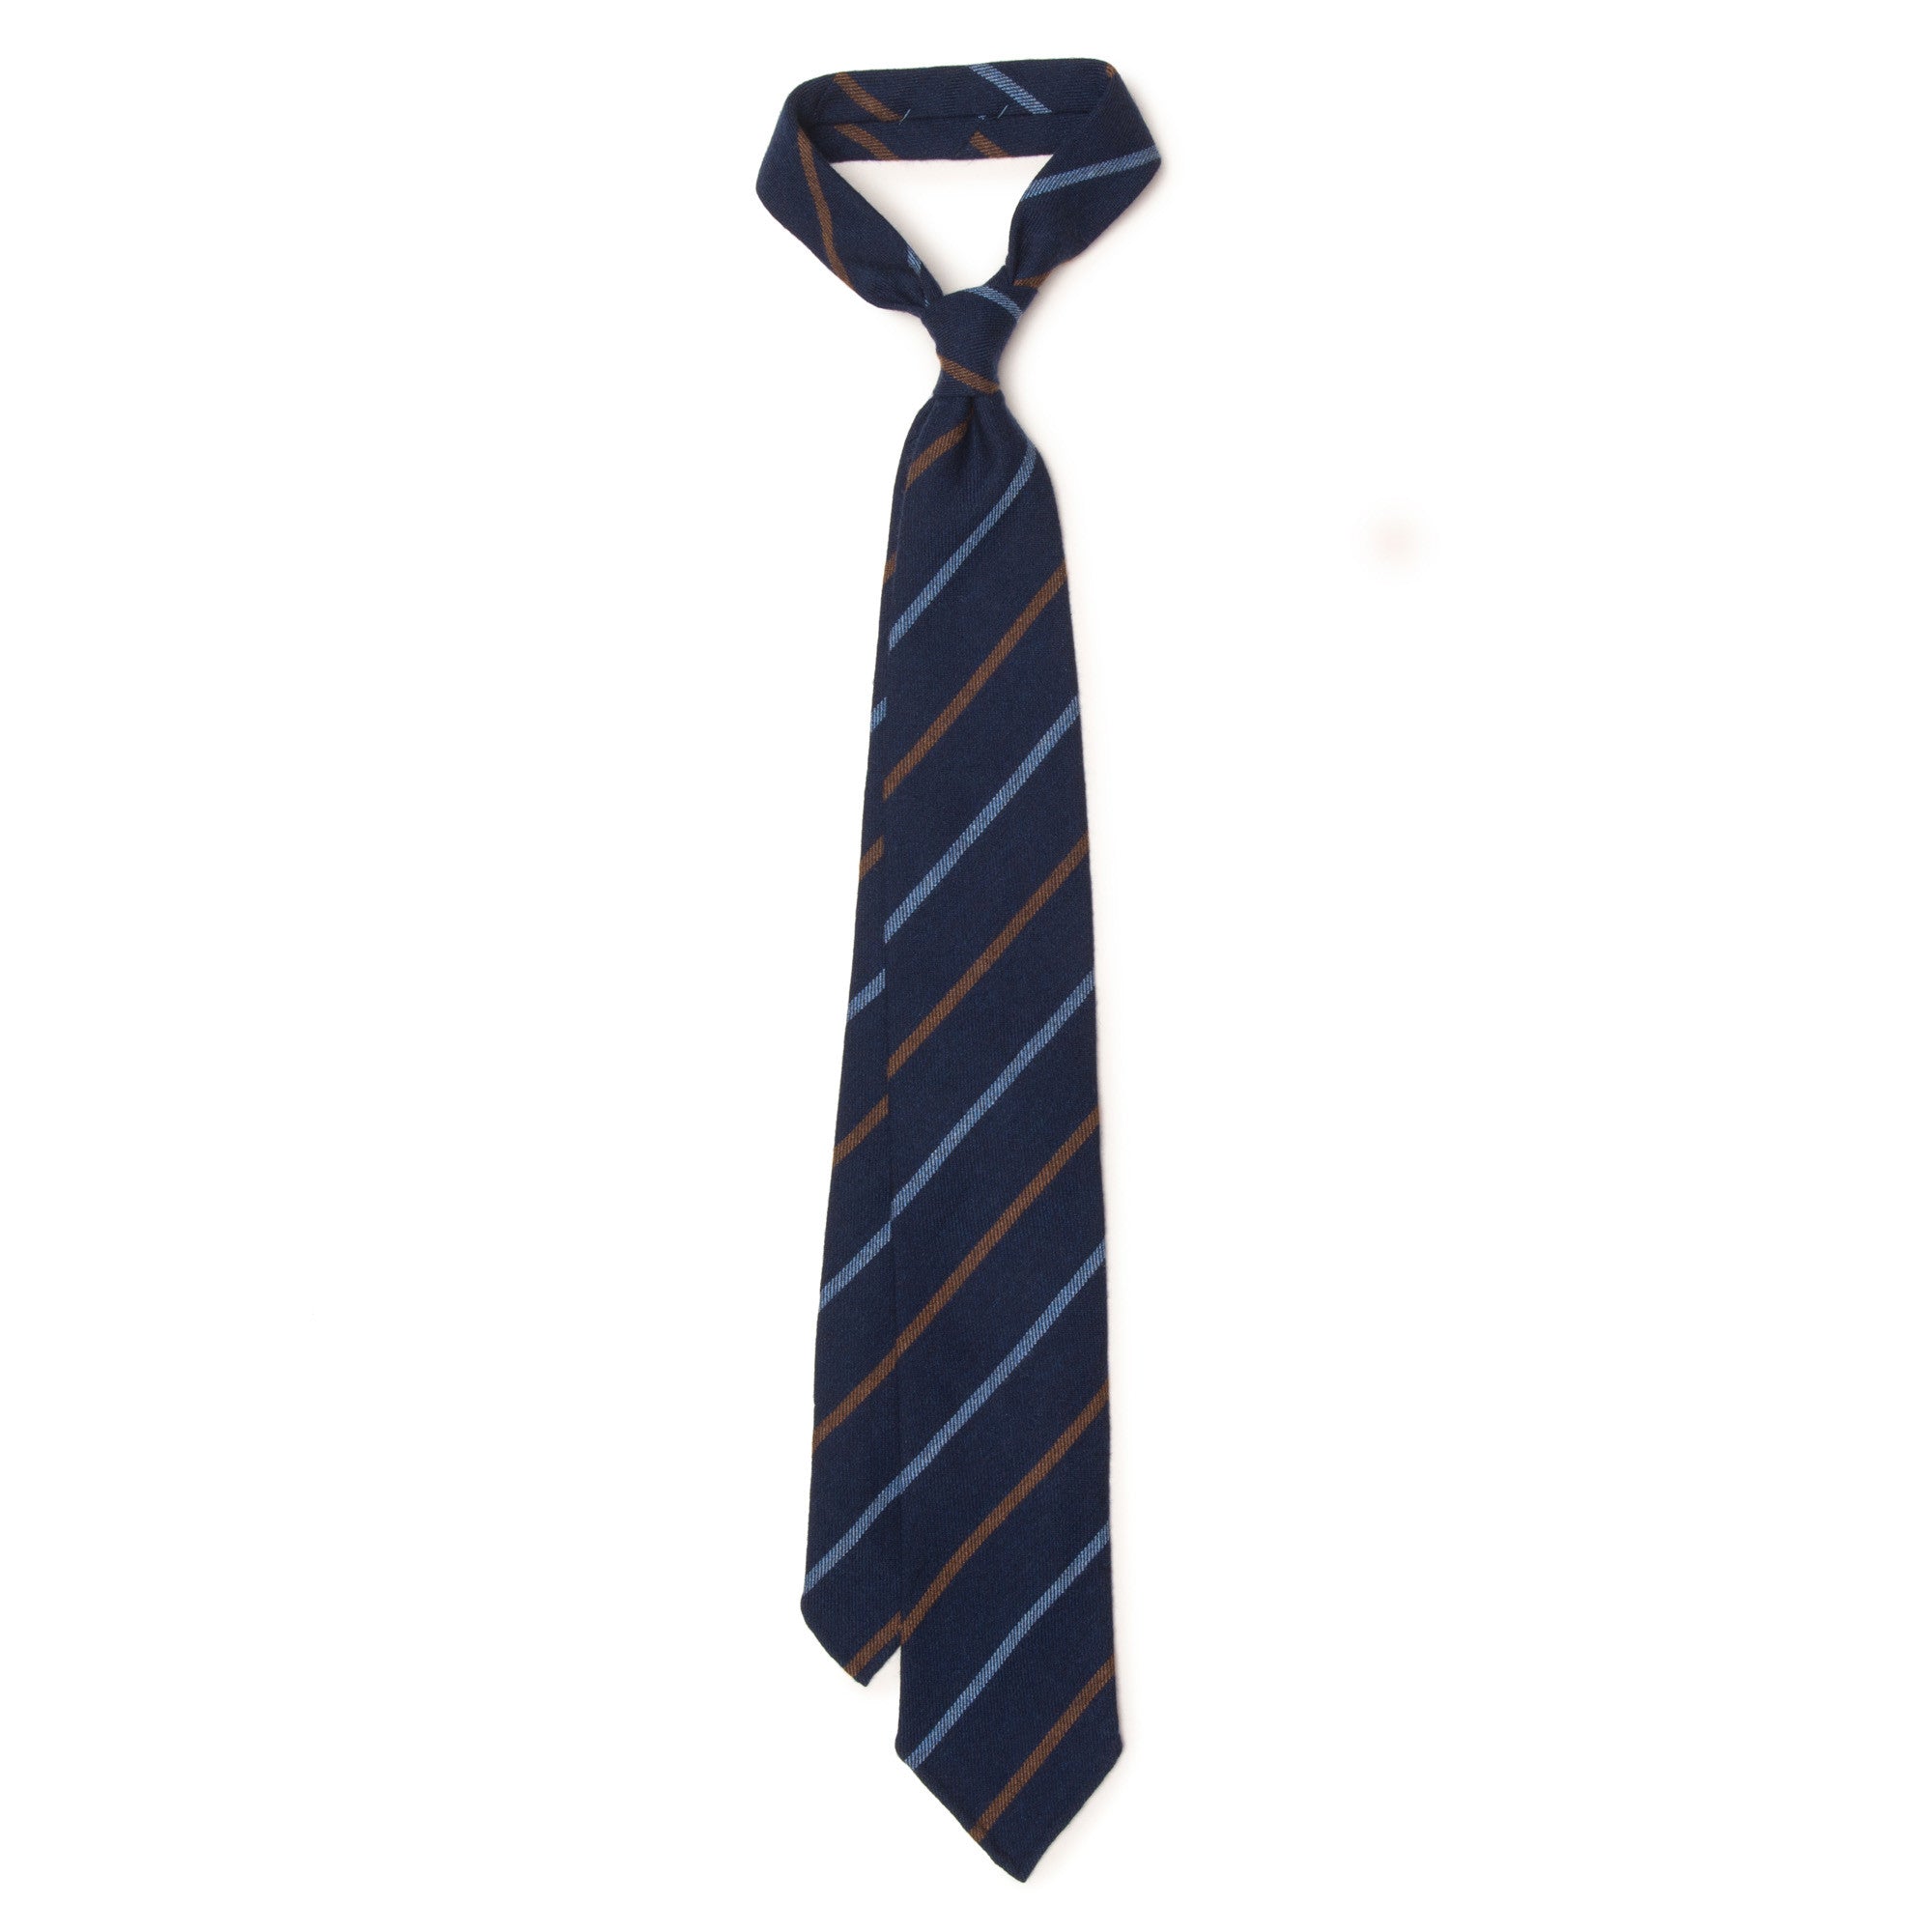 Striped Cashmere Tie - Light Blue and Brown on Dark Navy